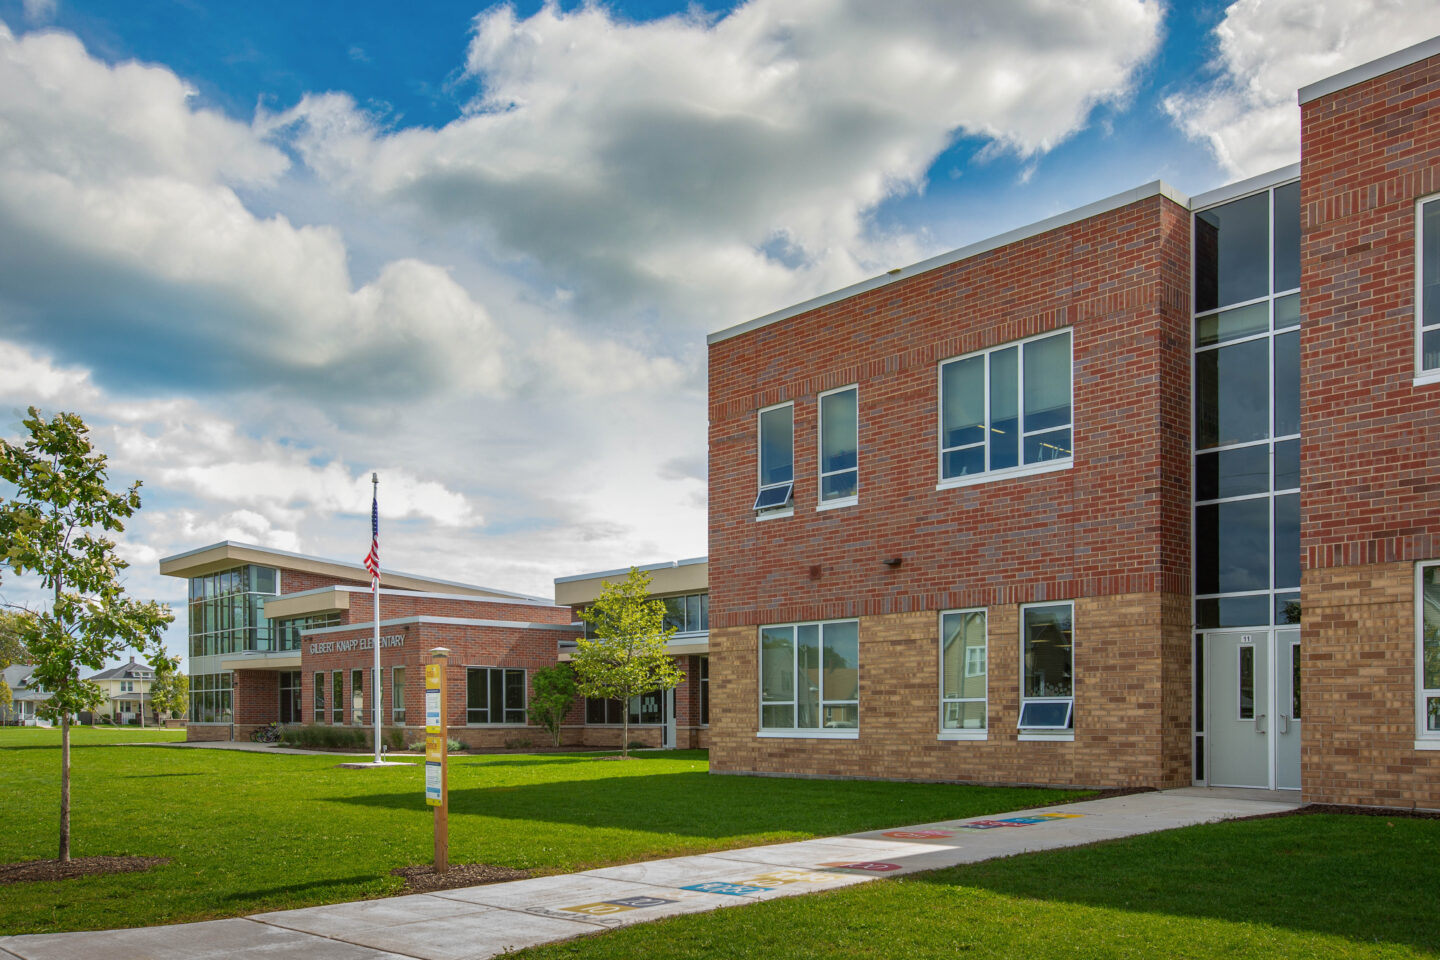 Knapp Elementary School Exterior designed by Bray Architects